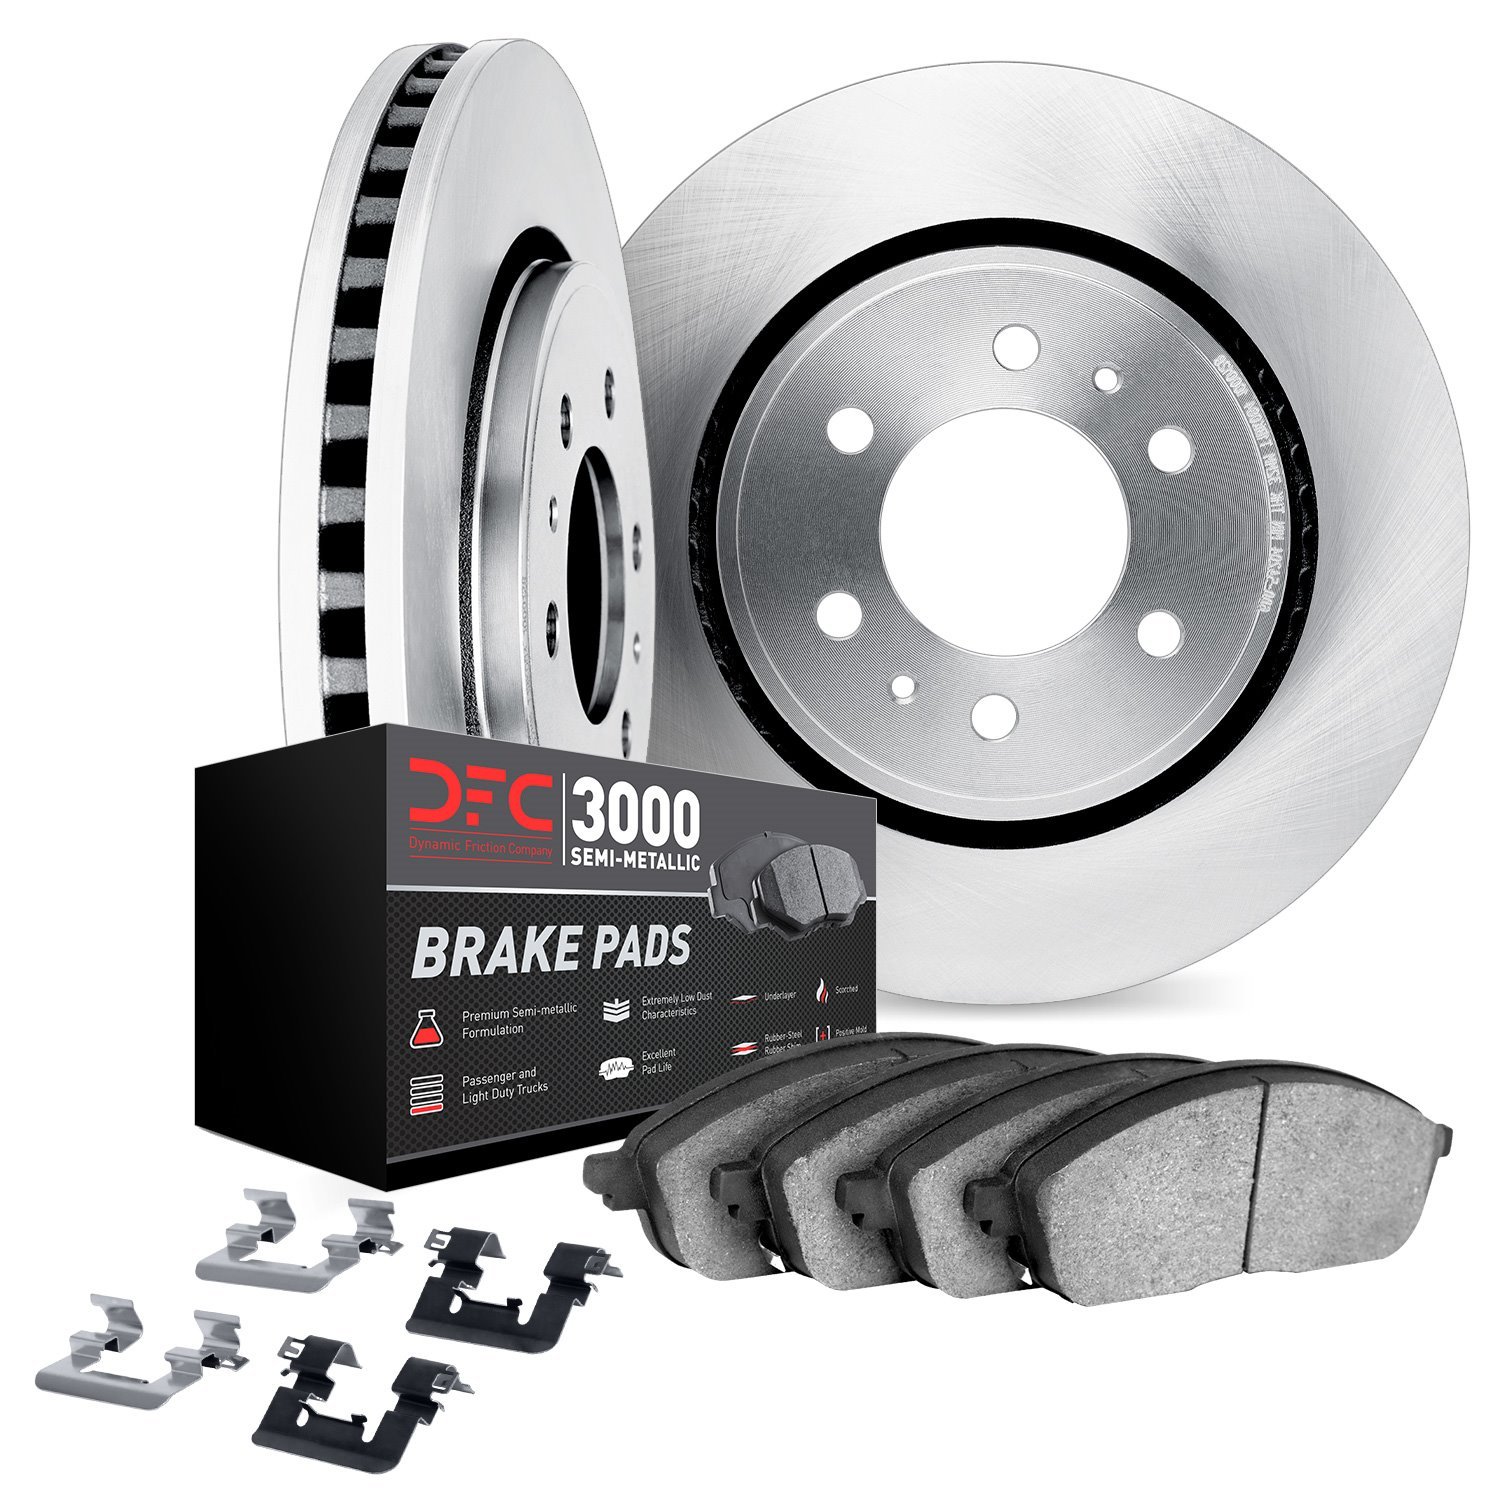 5112-76147 Slotted Brake Rotors with 3000-Series Semi-Metallic Brake Pads Kit & Hardware [Silver], Fits Select Lexus/Toyota/Scio